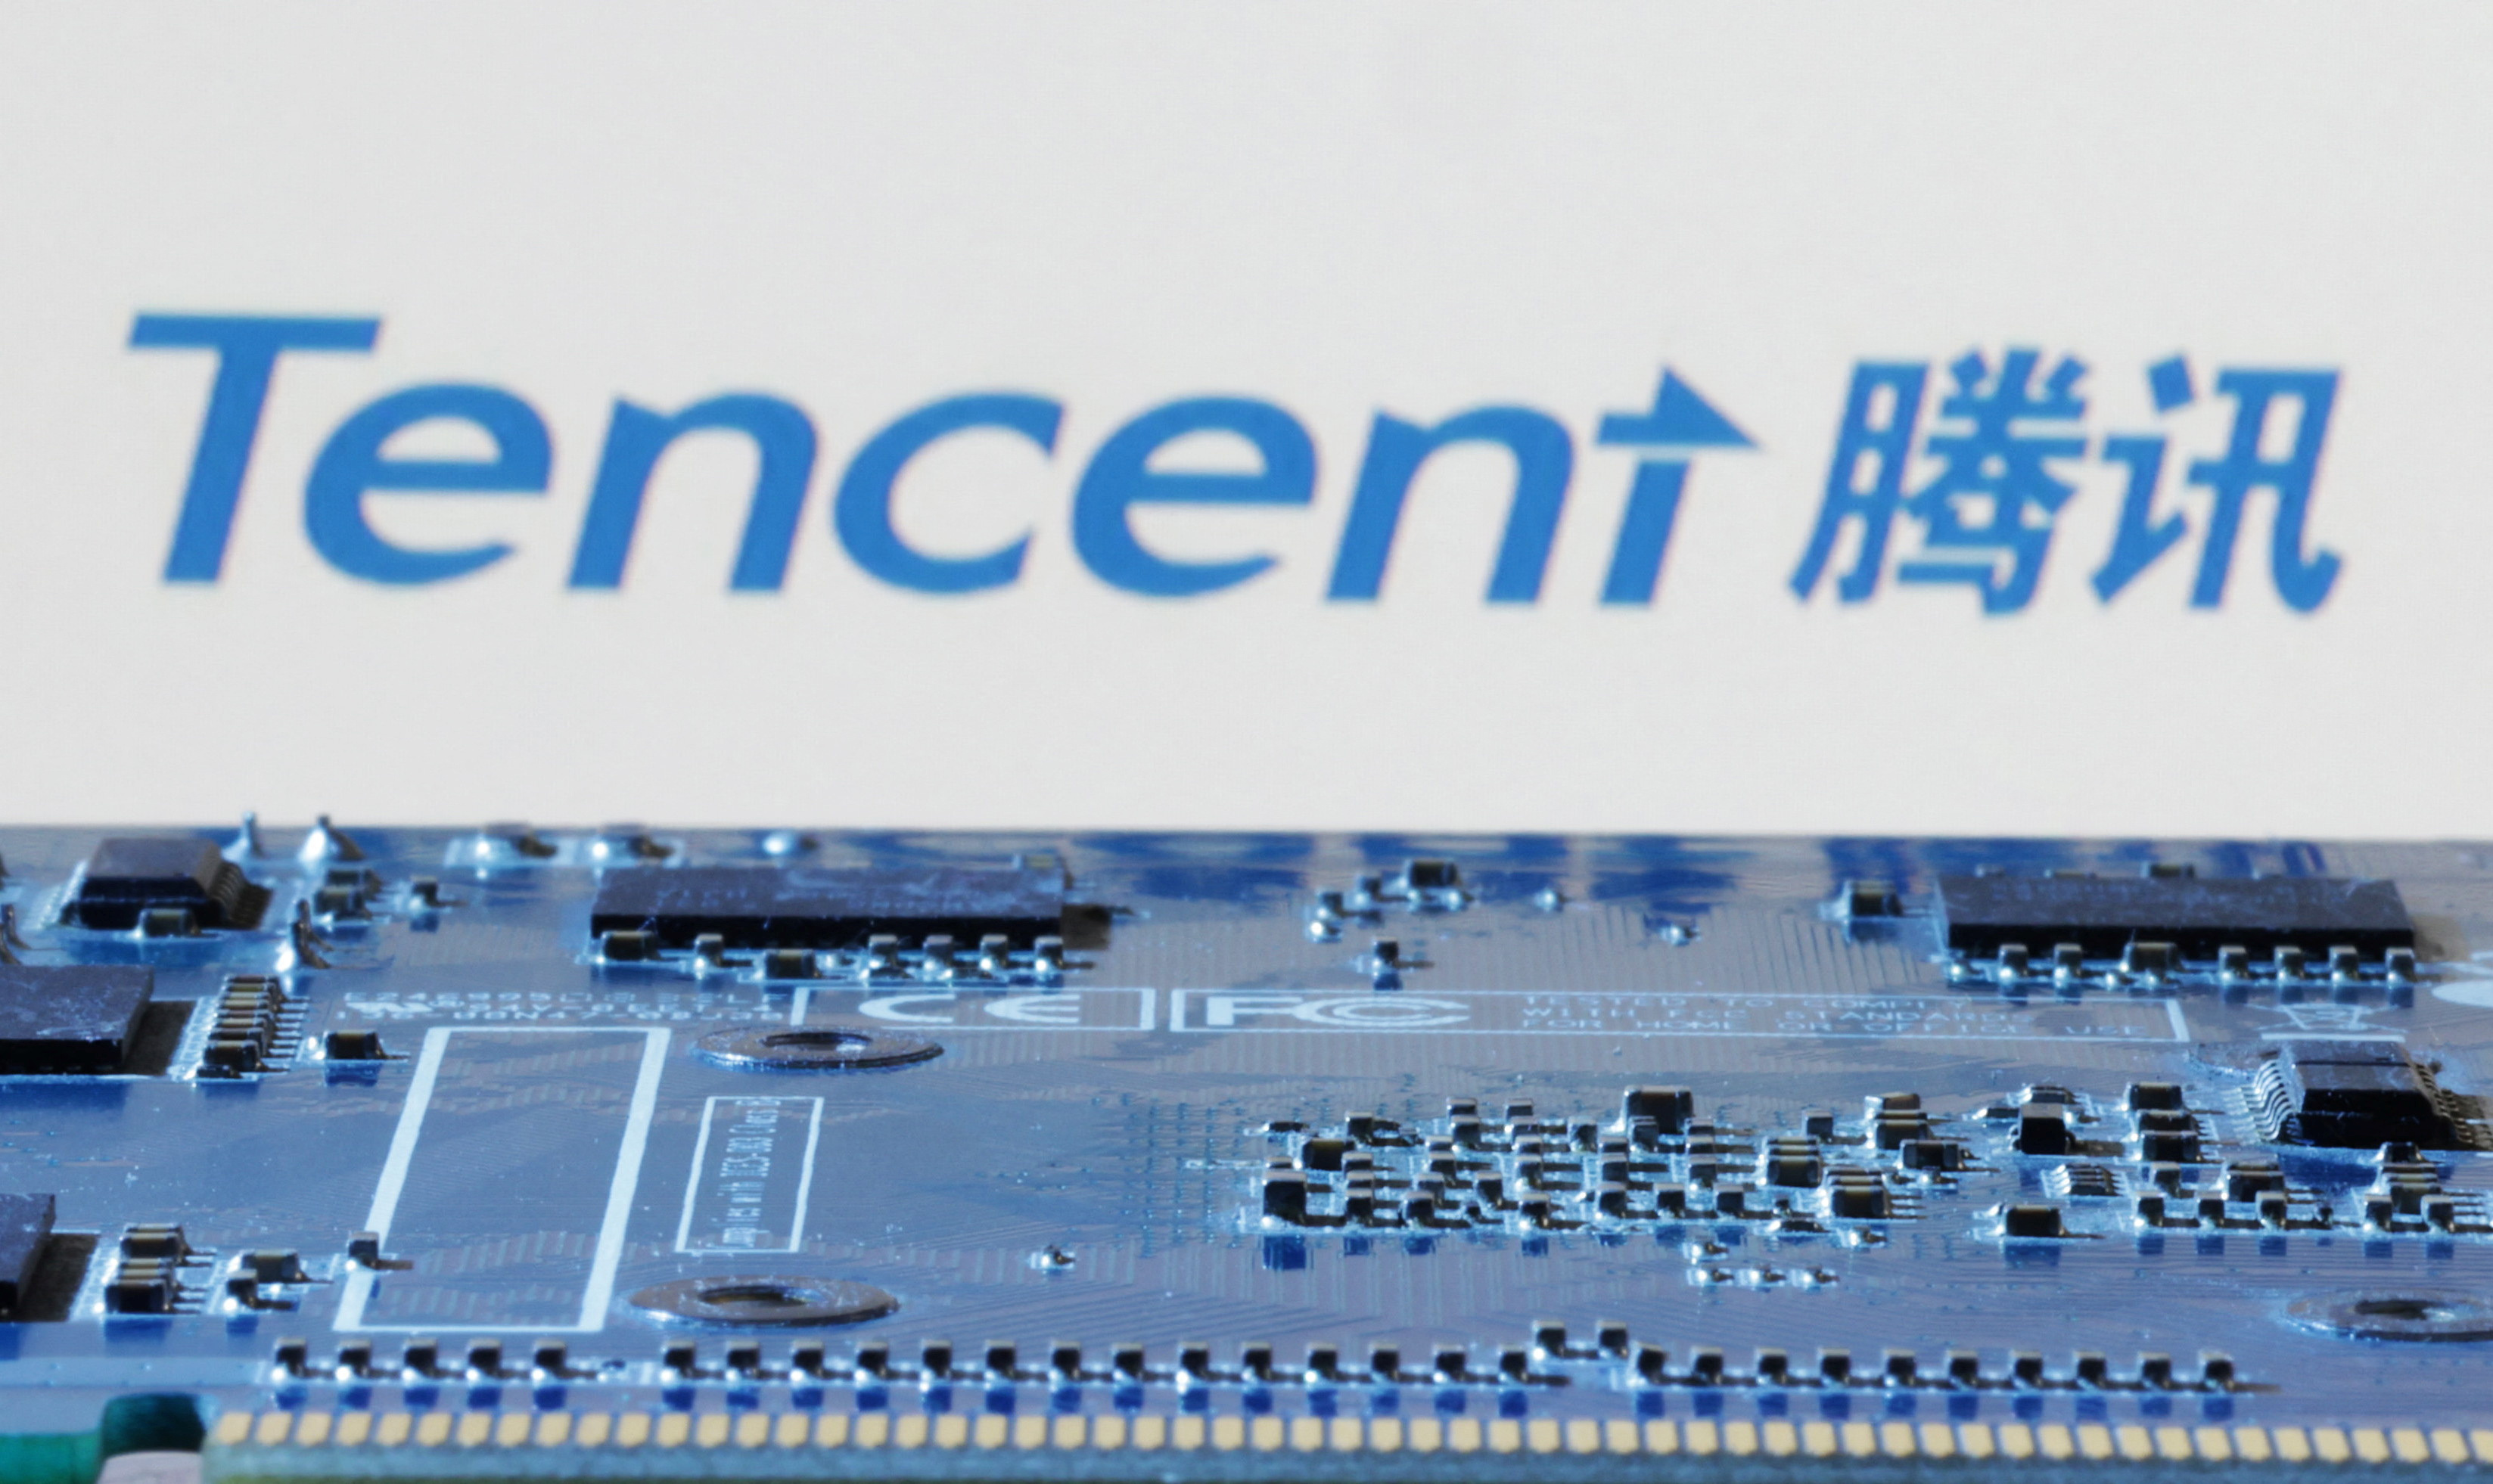 Illustration shows Tencent logo